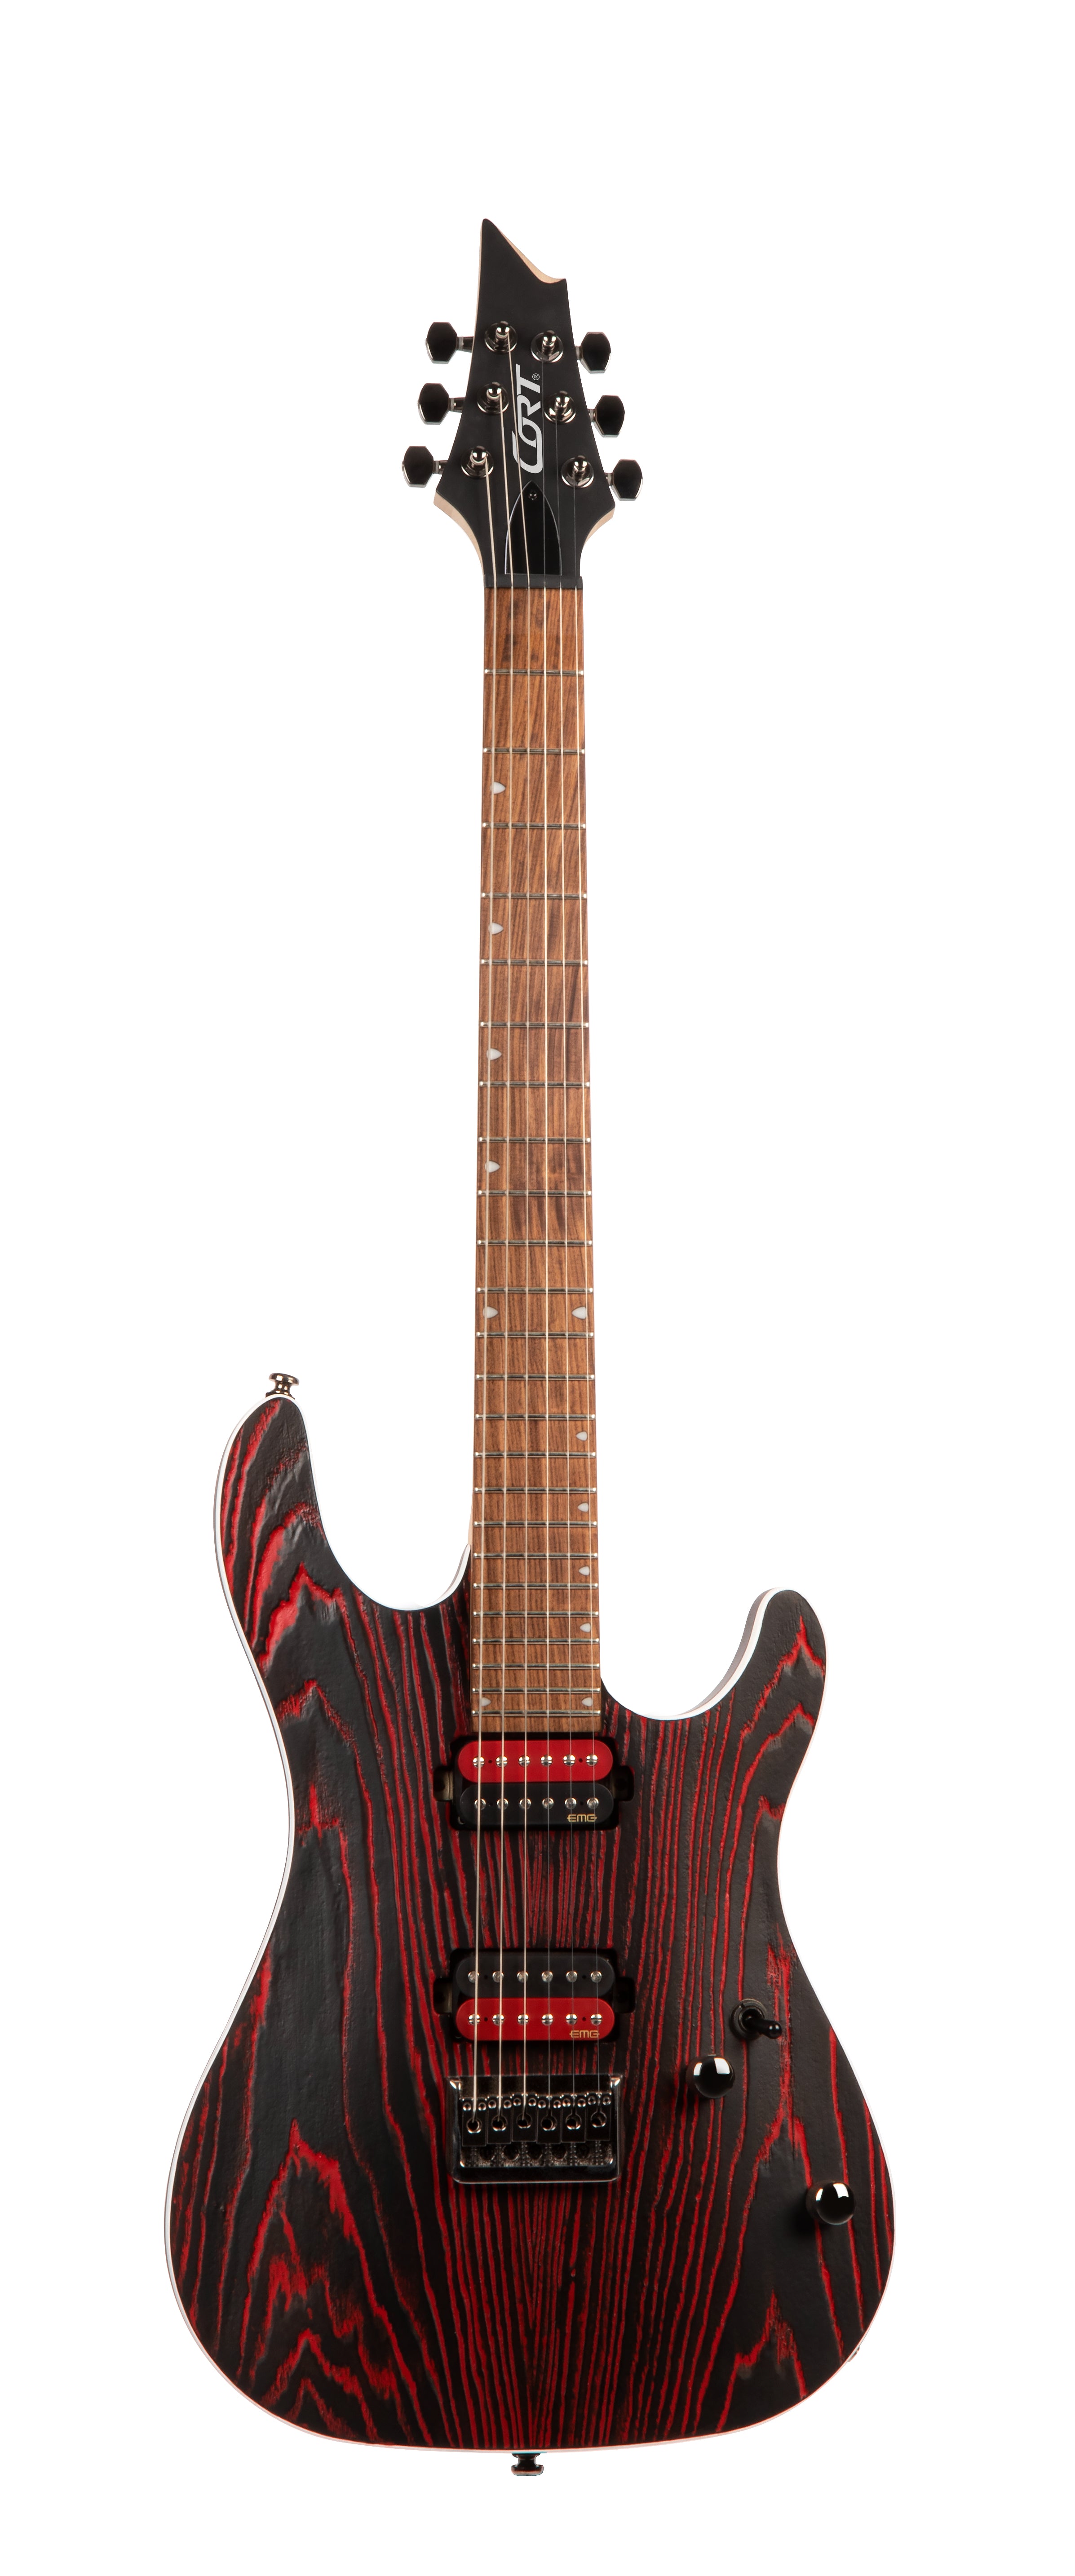 Cort KX300 Etched EBR, Electric Guitar for sale at Richards Guitars.